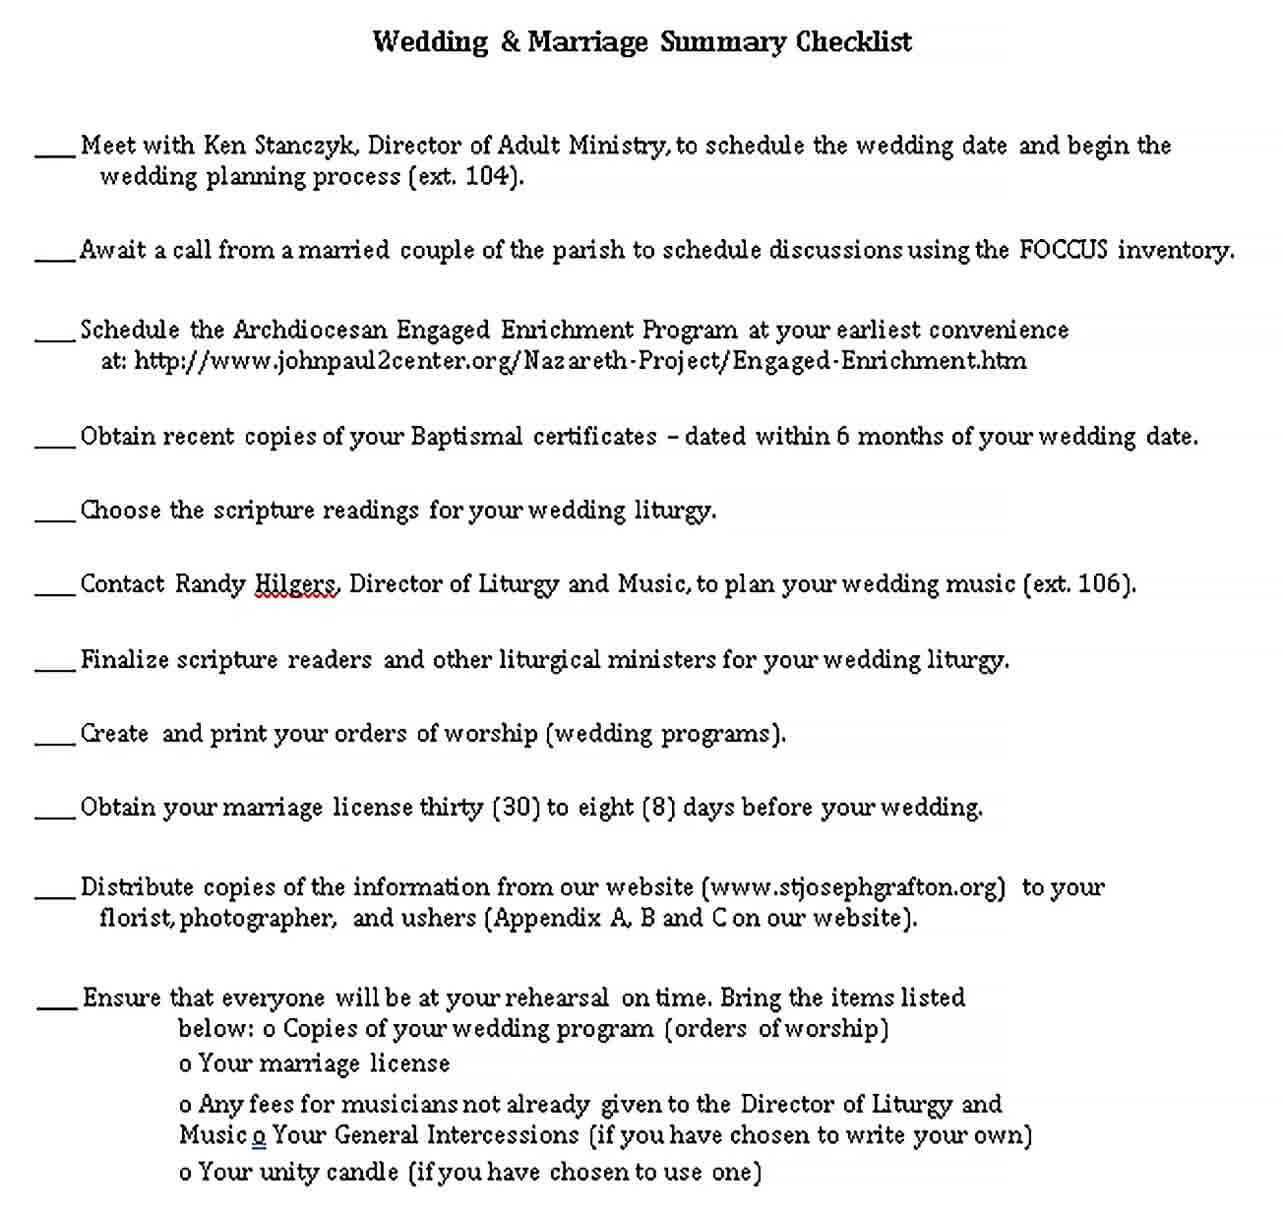 Sample Wedding Summary Checklist 1